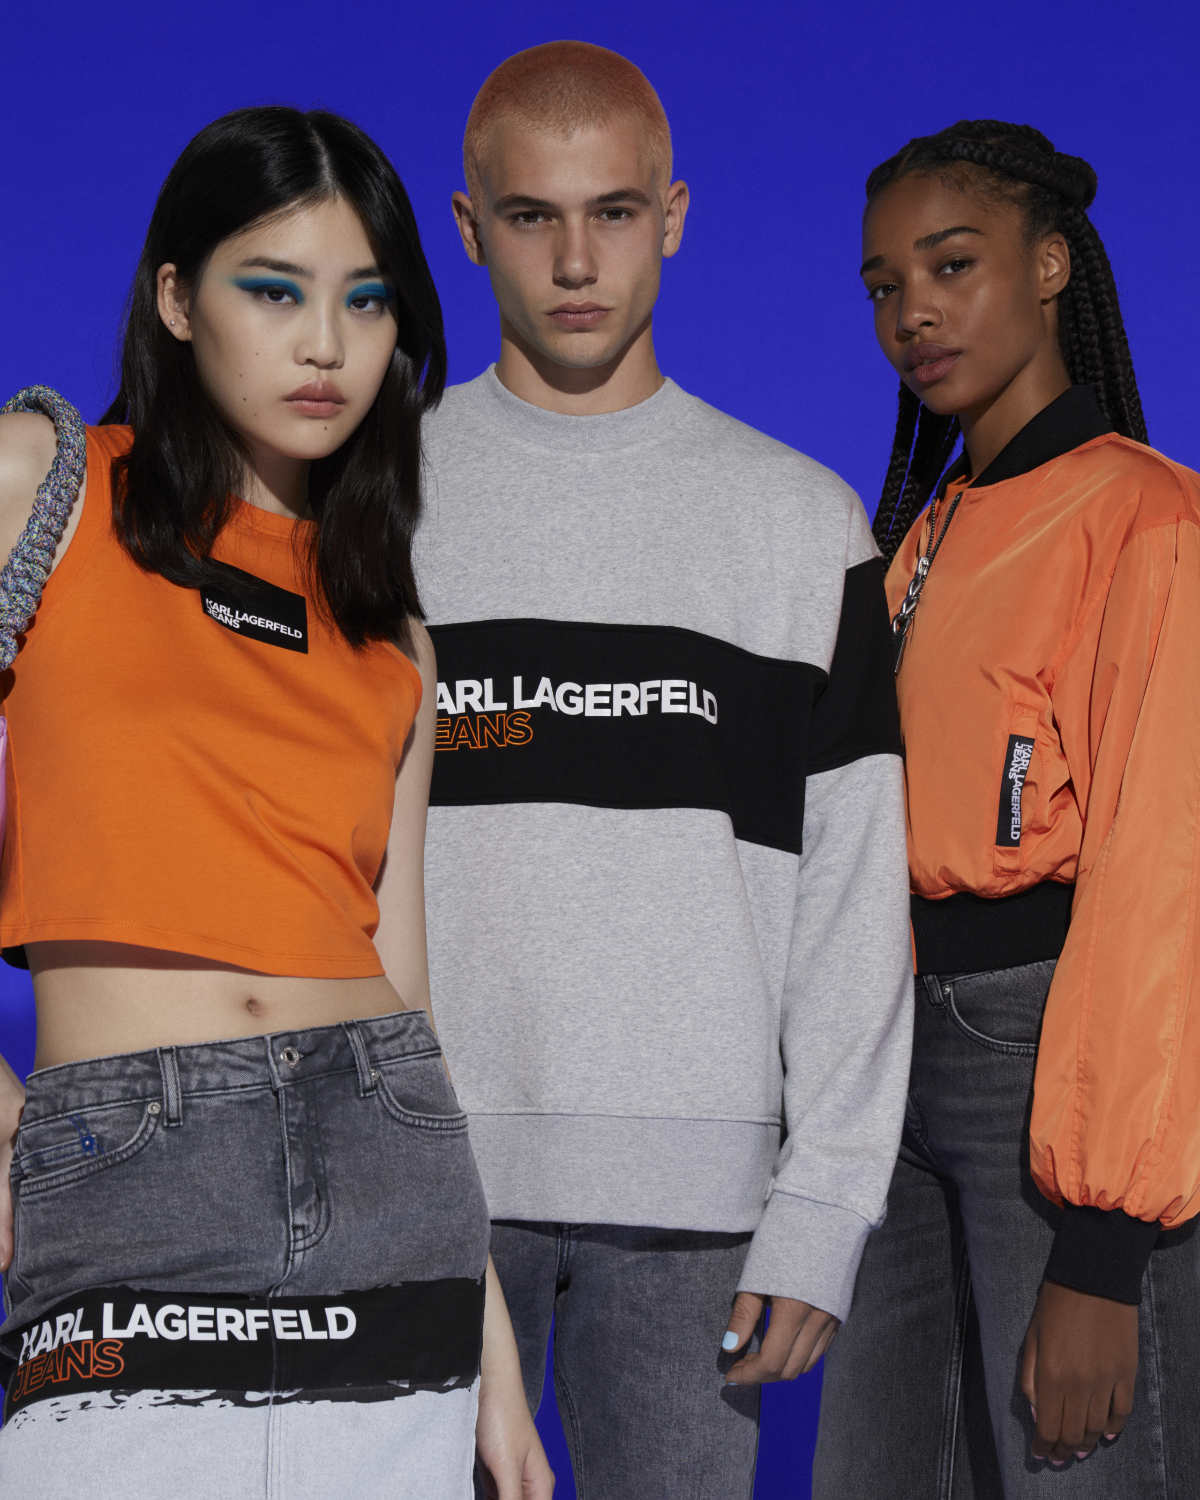 Karl Lagerfeld Taps Into Gen Z Audience With Digitally Driven New Denim Brand: Karl Lagerfeld Jeans